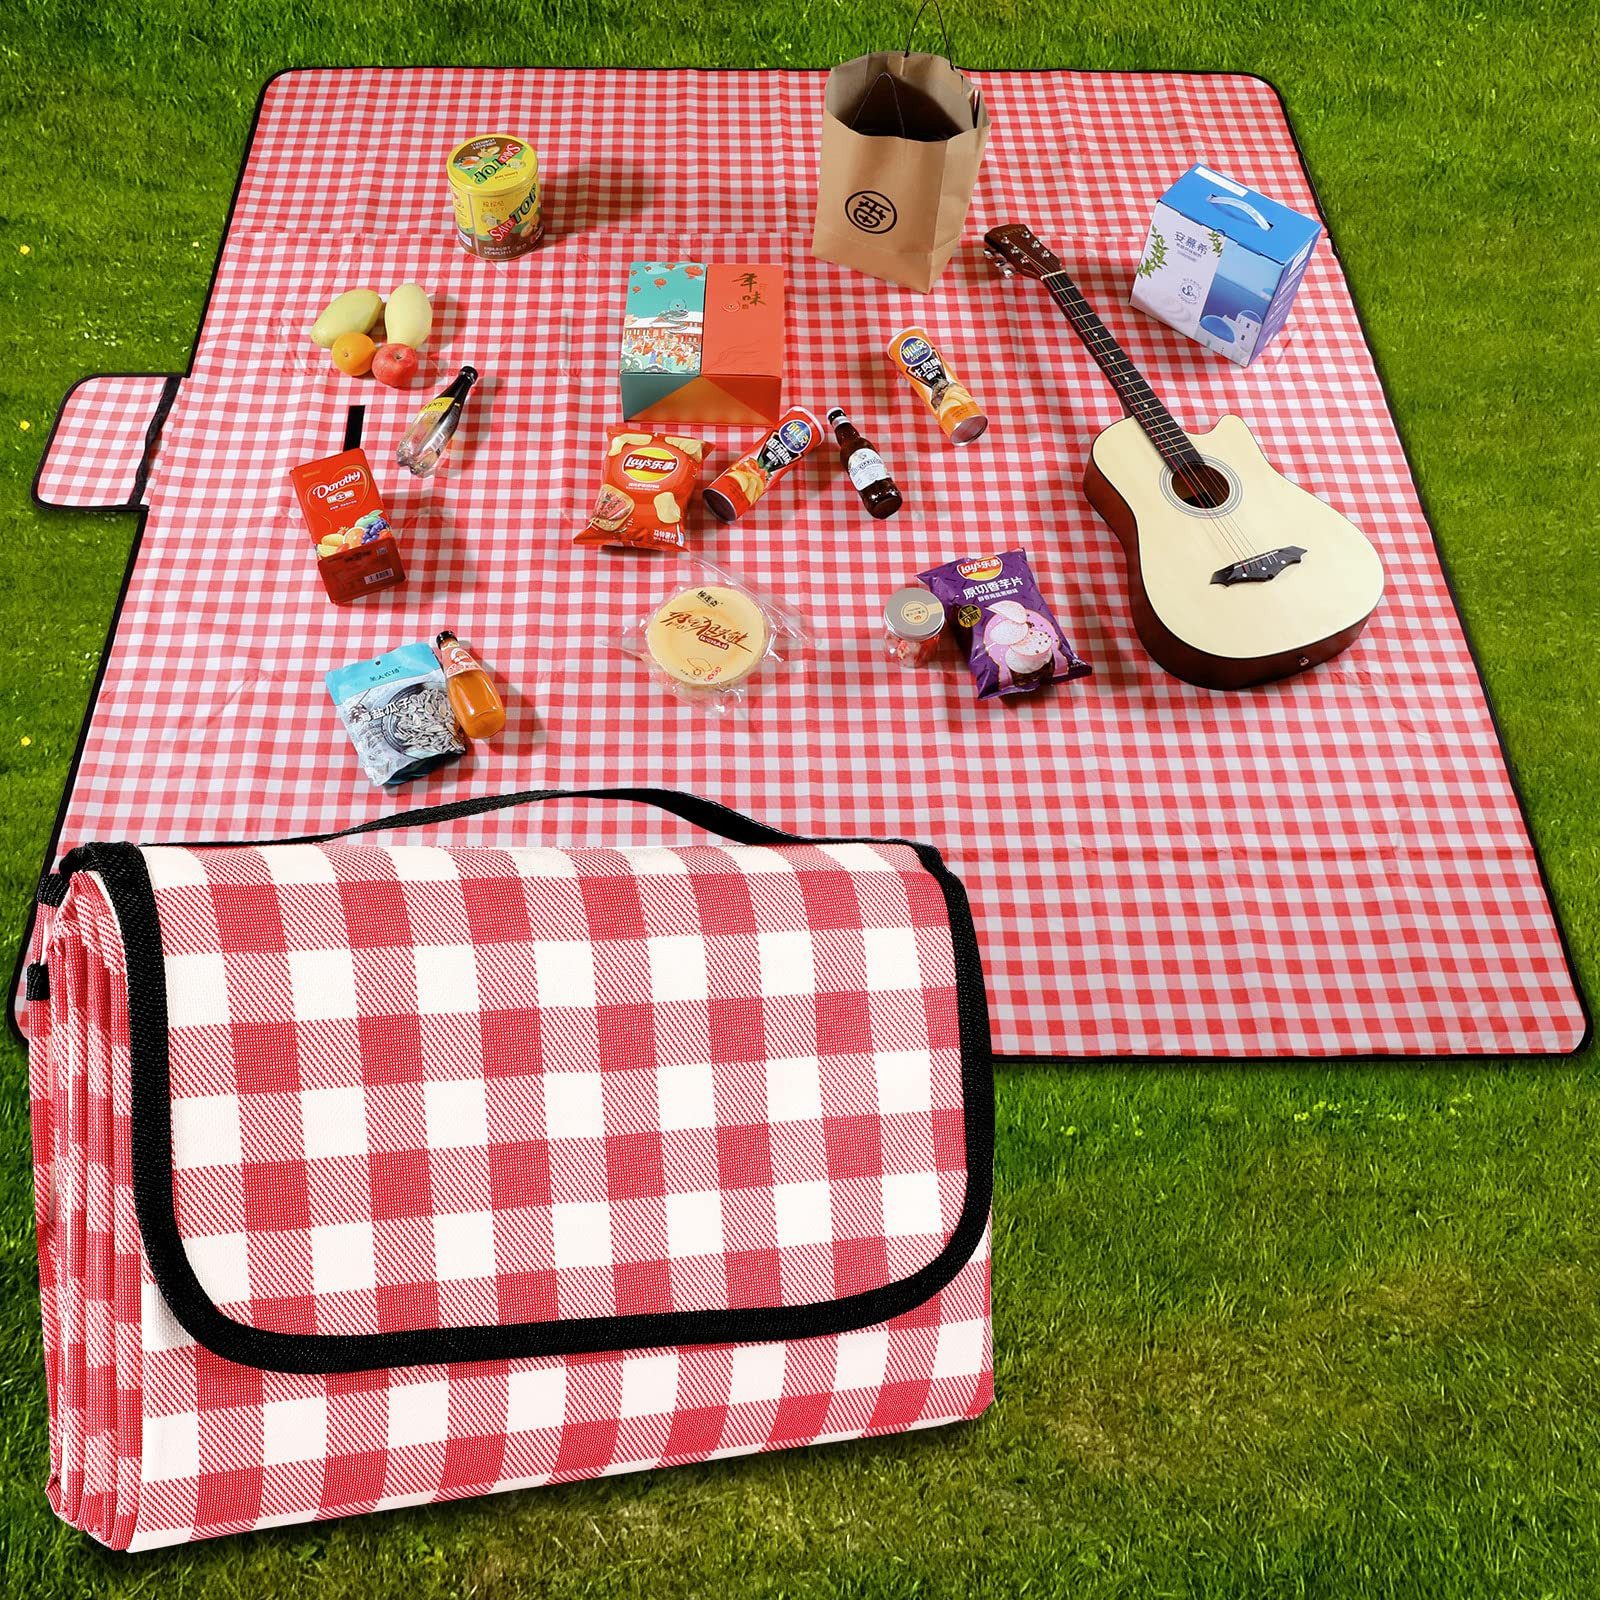 Picknickdecke Picknickdecke 200 cm x 200 cm, wasserdicht, Stranddecke, CoolBlauza, Picknick-Matte,für Wandern, Reisen, Outdoor, Camping, Parks